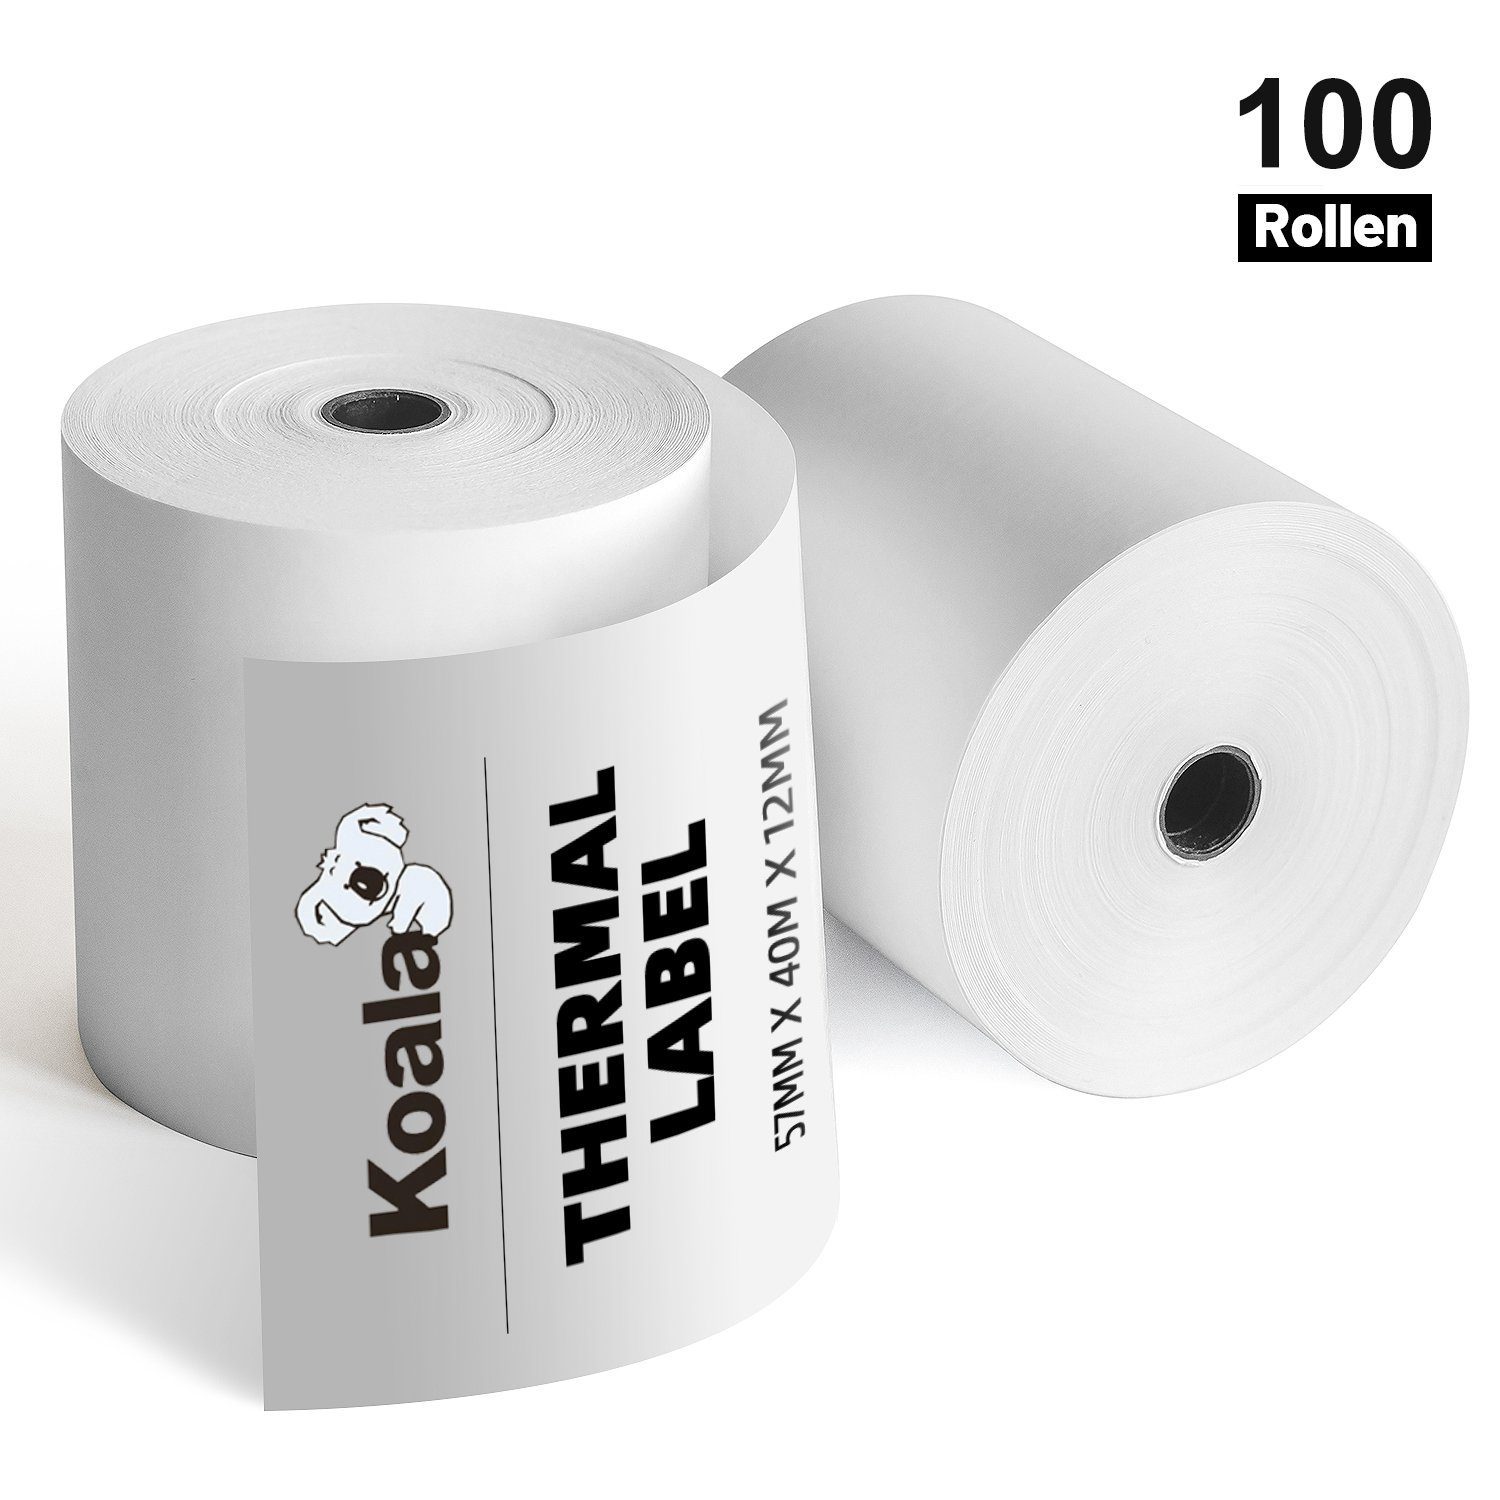 Koala Etikettenpapier 100 Rollen 57 x 40 mm Thermopapier Bonrolle für Kassen, Drucker